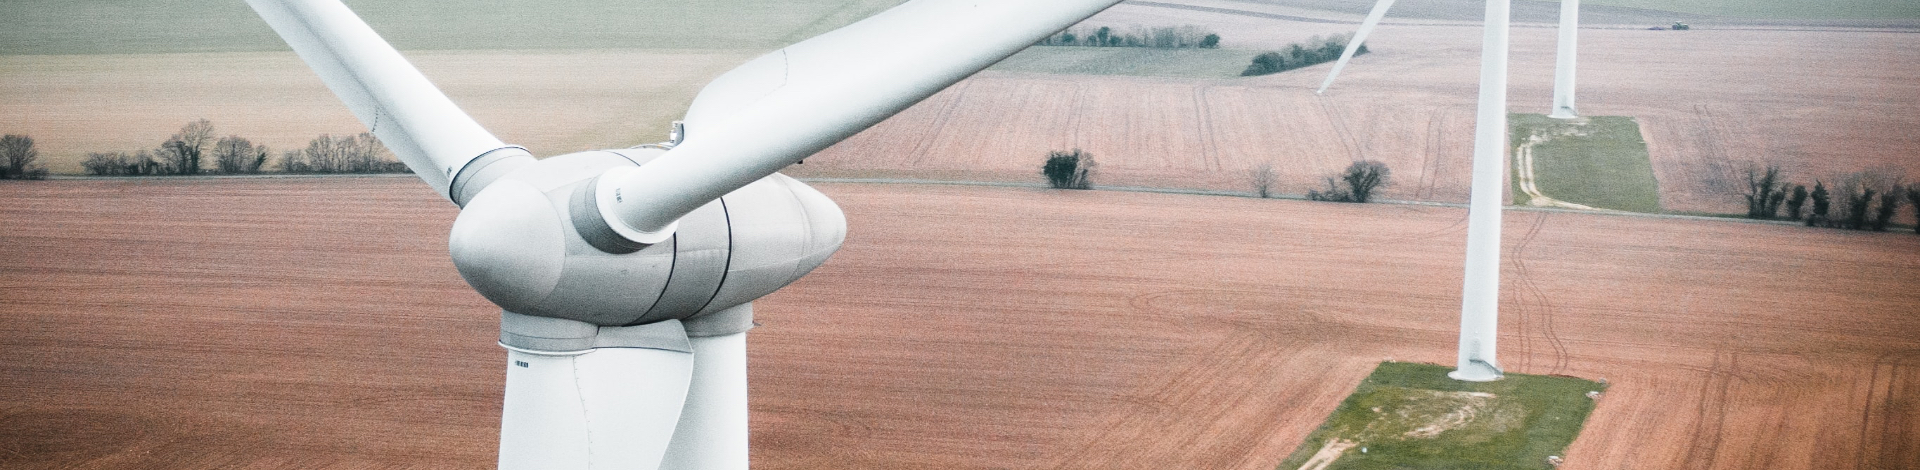 Birds eye view of a wind turbine and wind farm